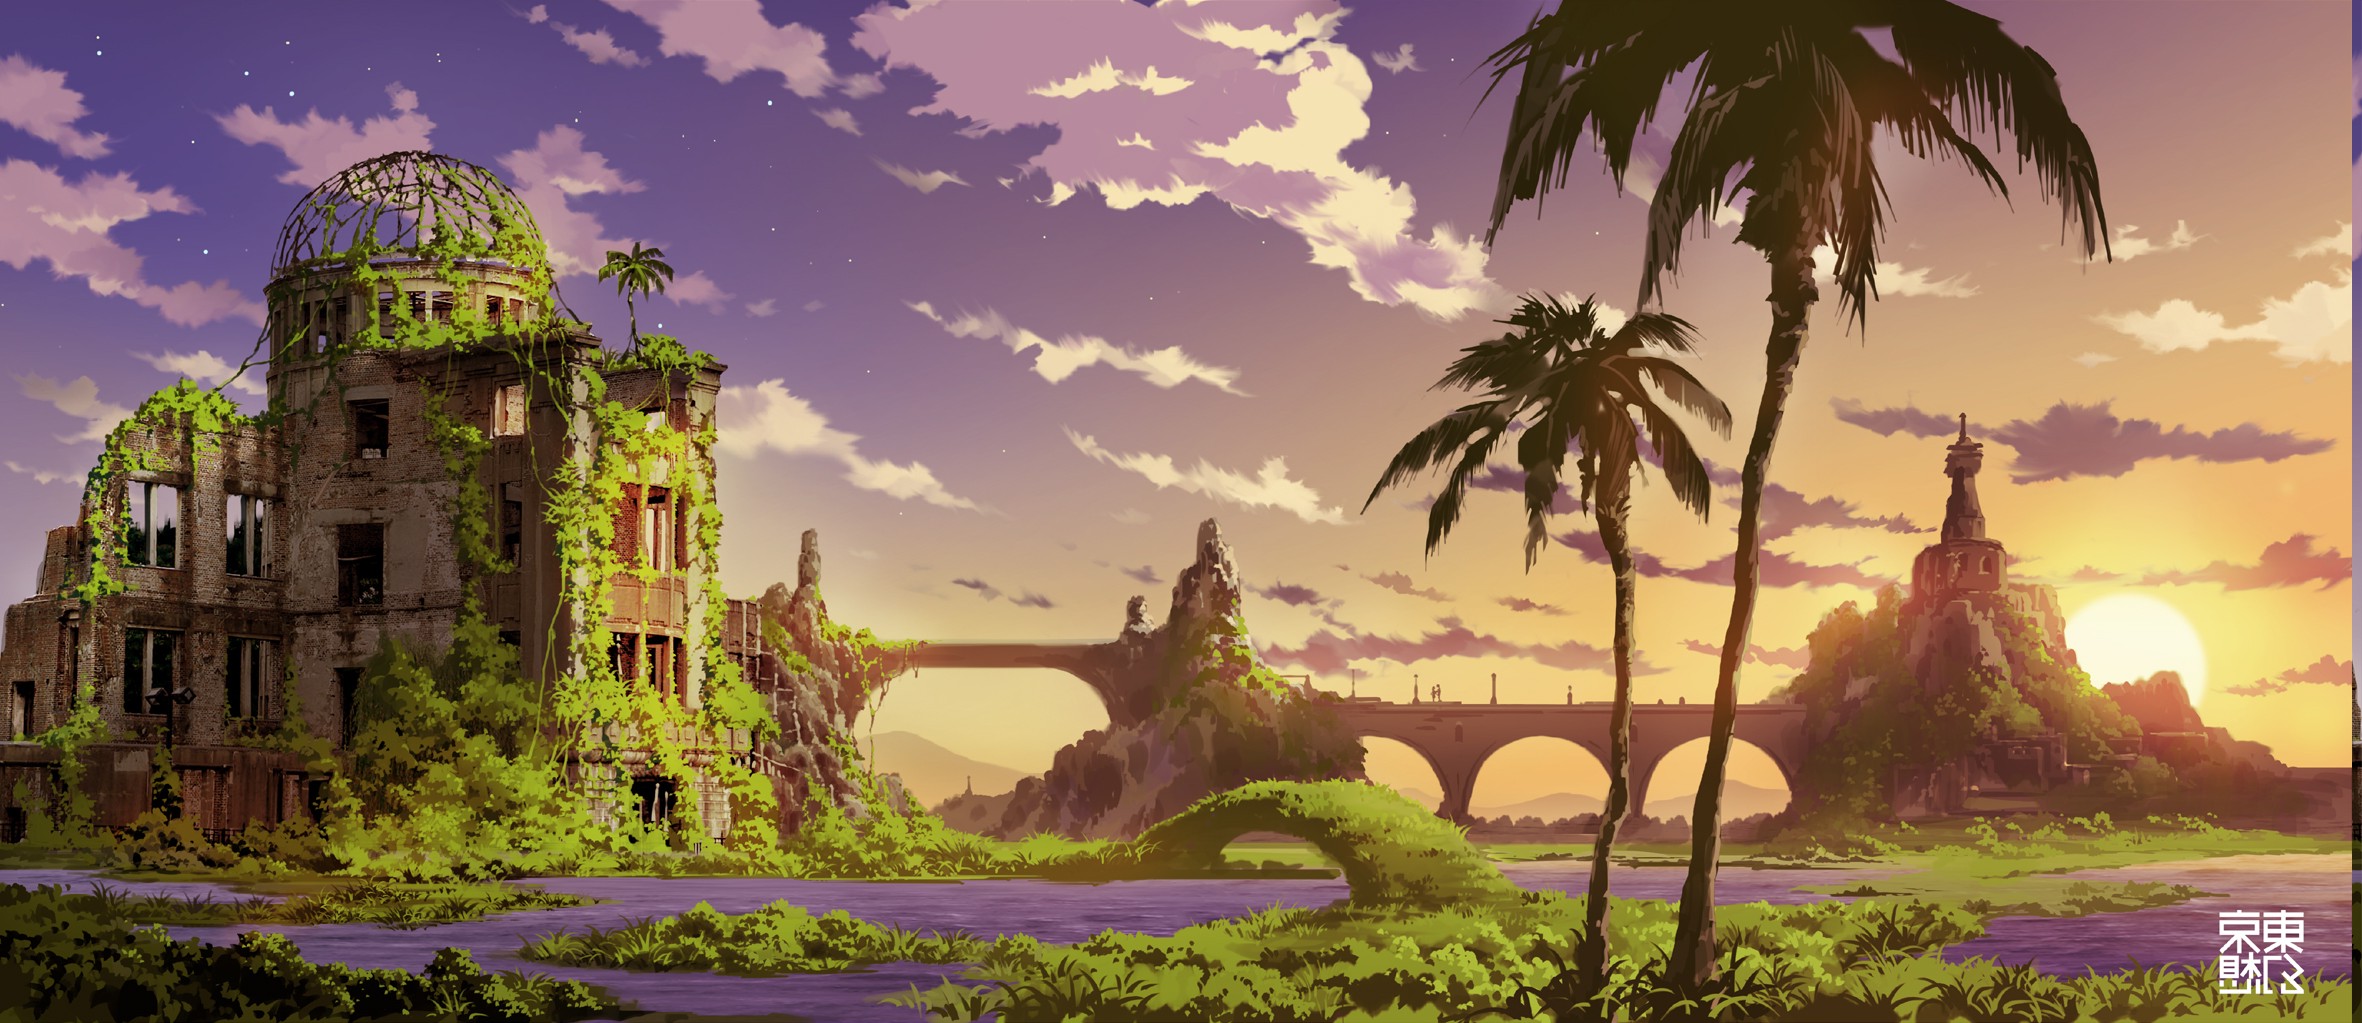 anime, Landscape, Fantasy Art Wallpapers HD / Desktop and Mobile Backgrounds